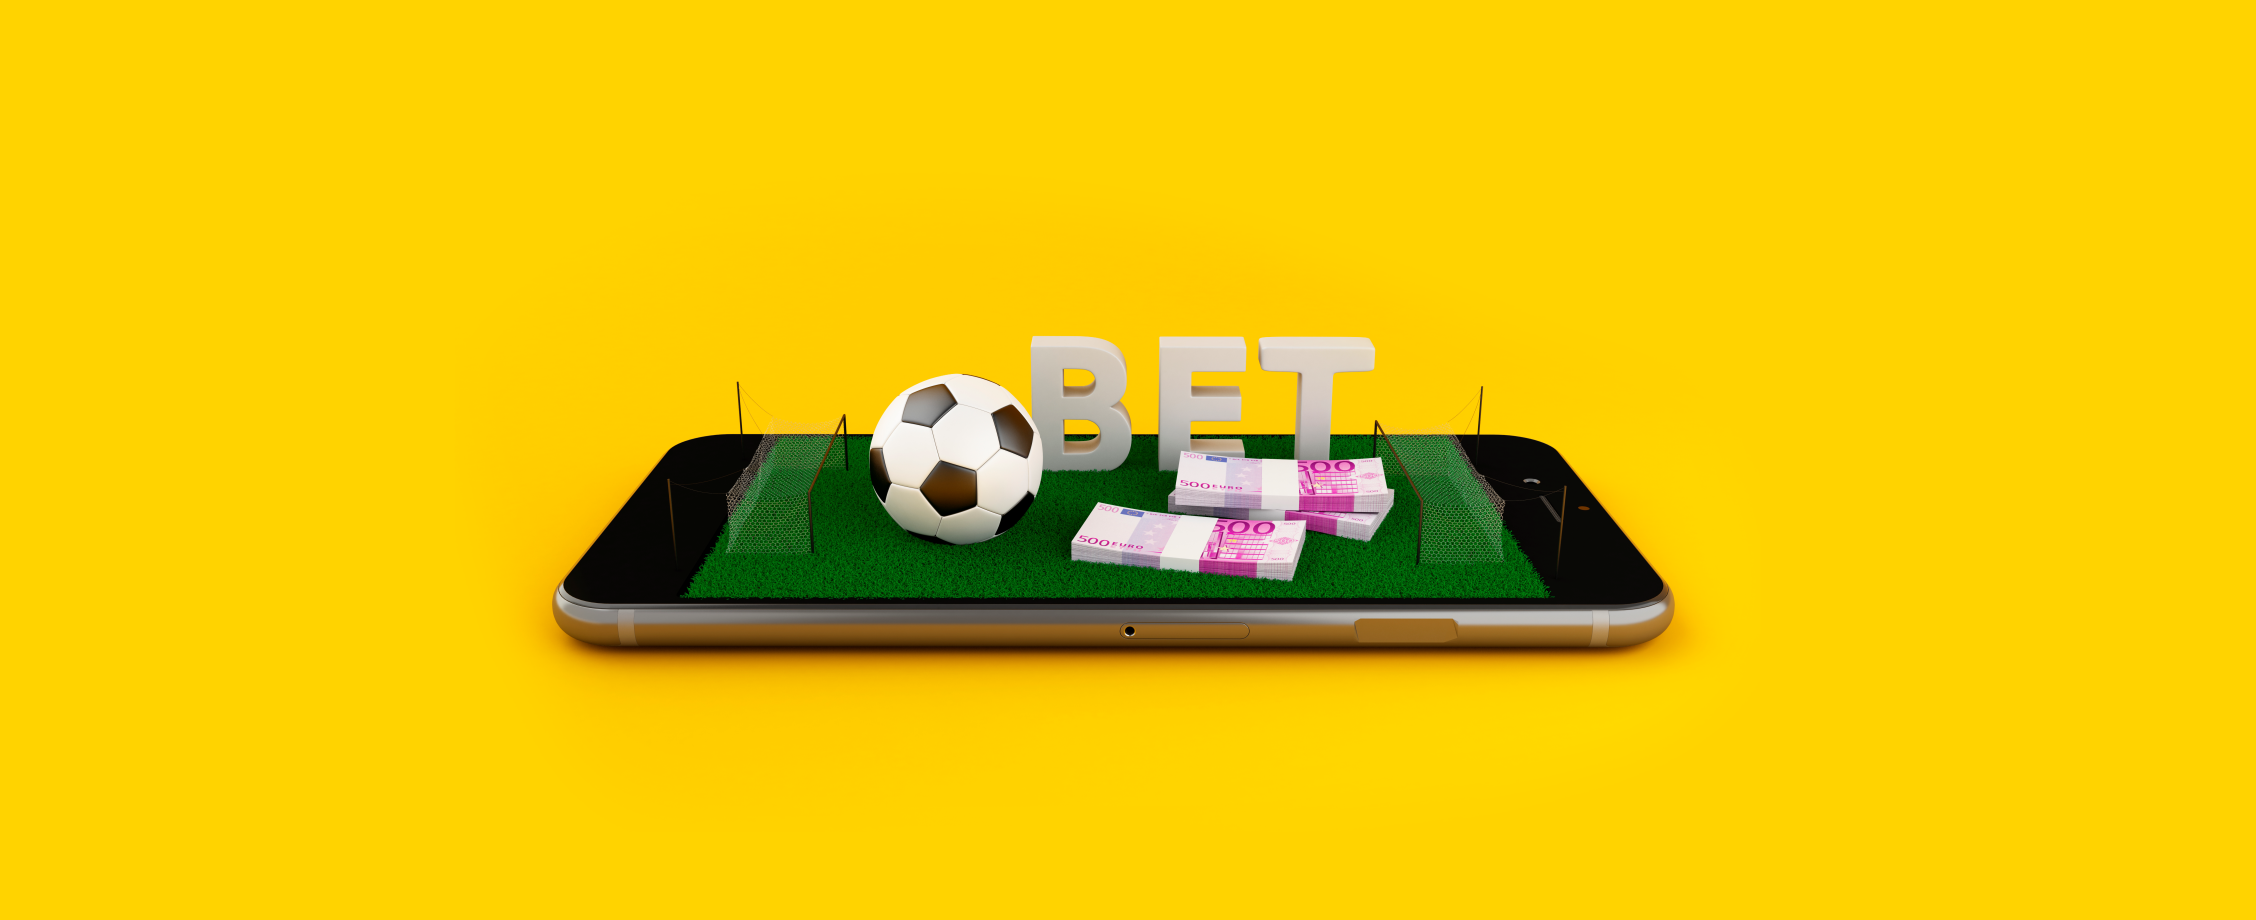 Теги ставки. Футбол 3d icon. Картинки реклама азартных игр ставки футбол.